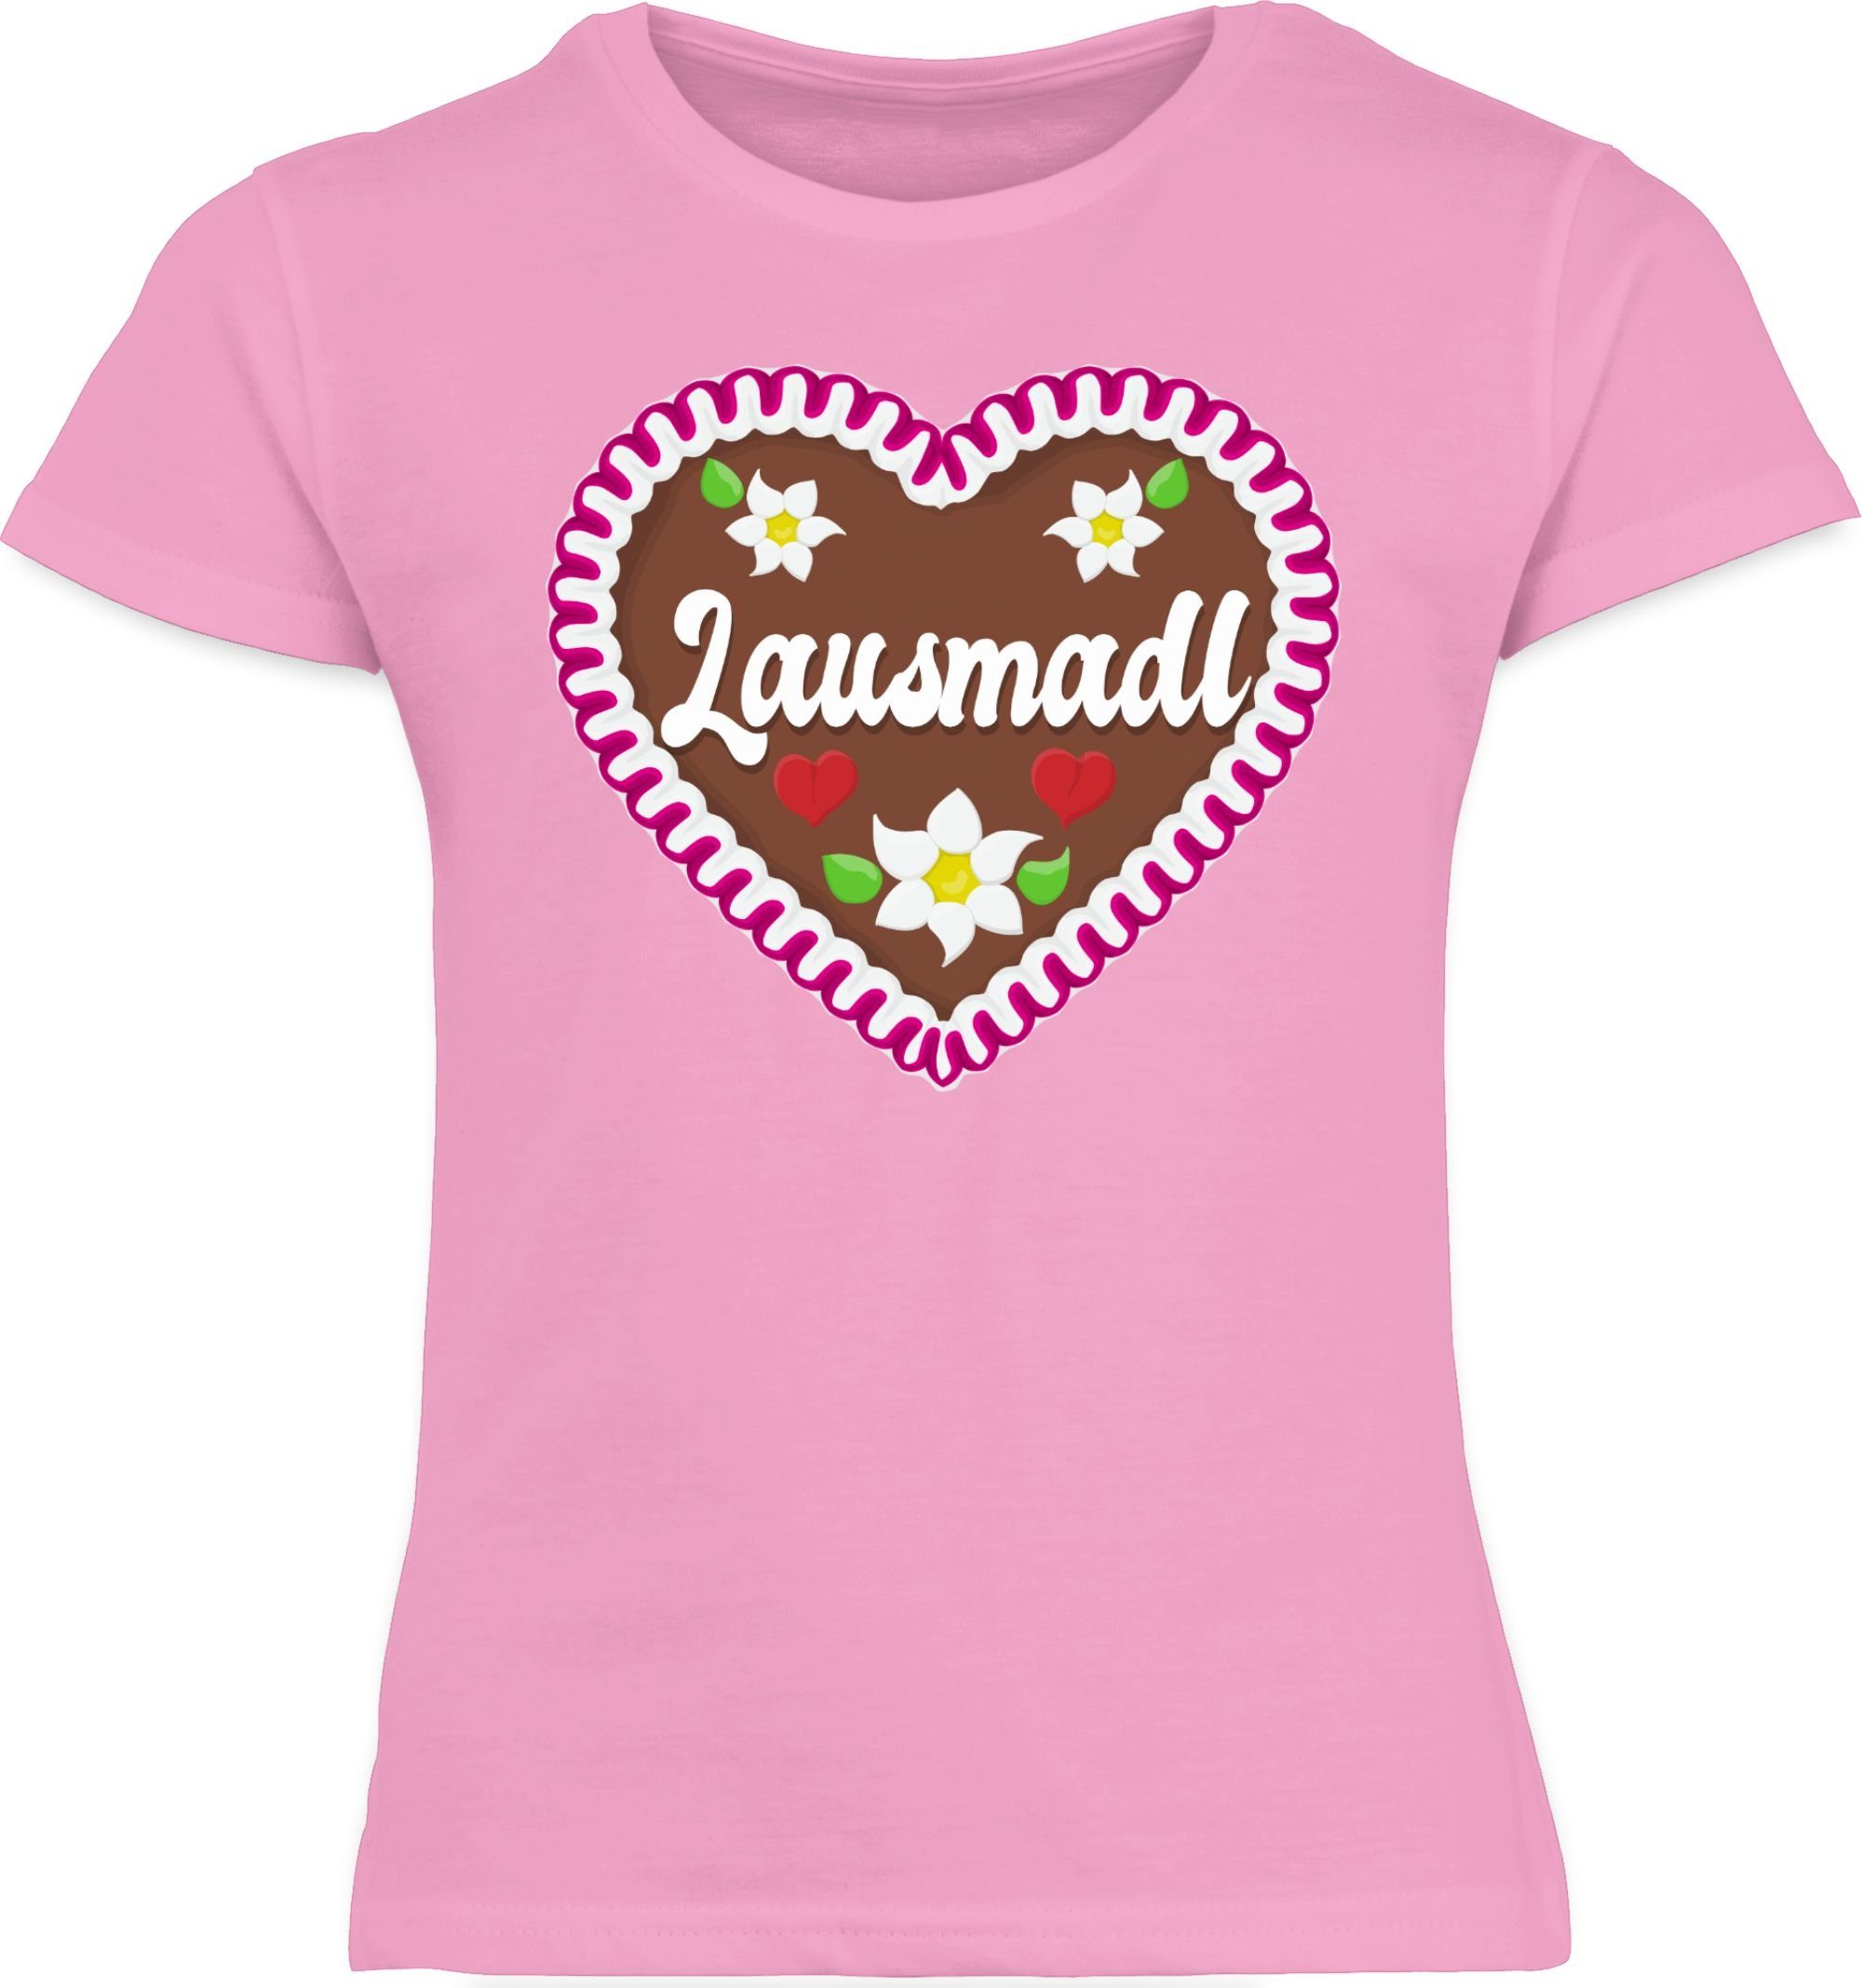 2 Mode Oktoberfest Kinder Shirtracer Rosa Outfit T-Shirt Lausmadl Lebkuchenherz für